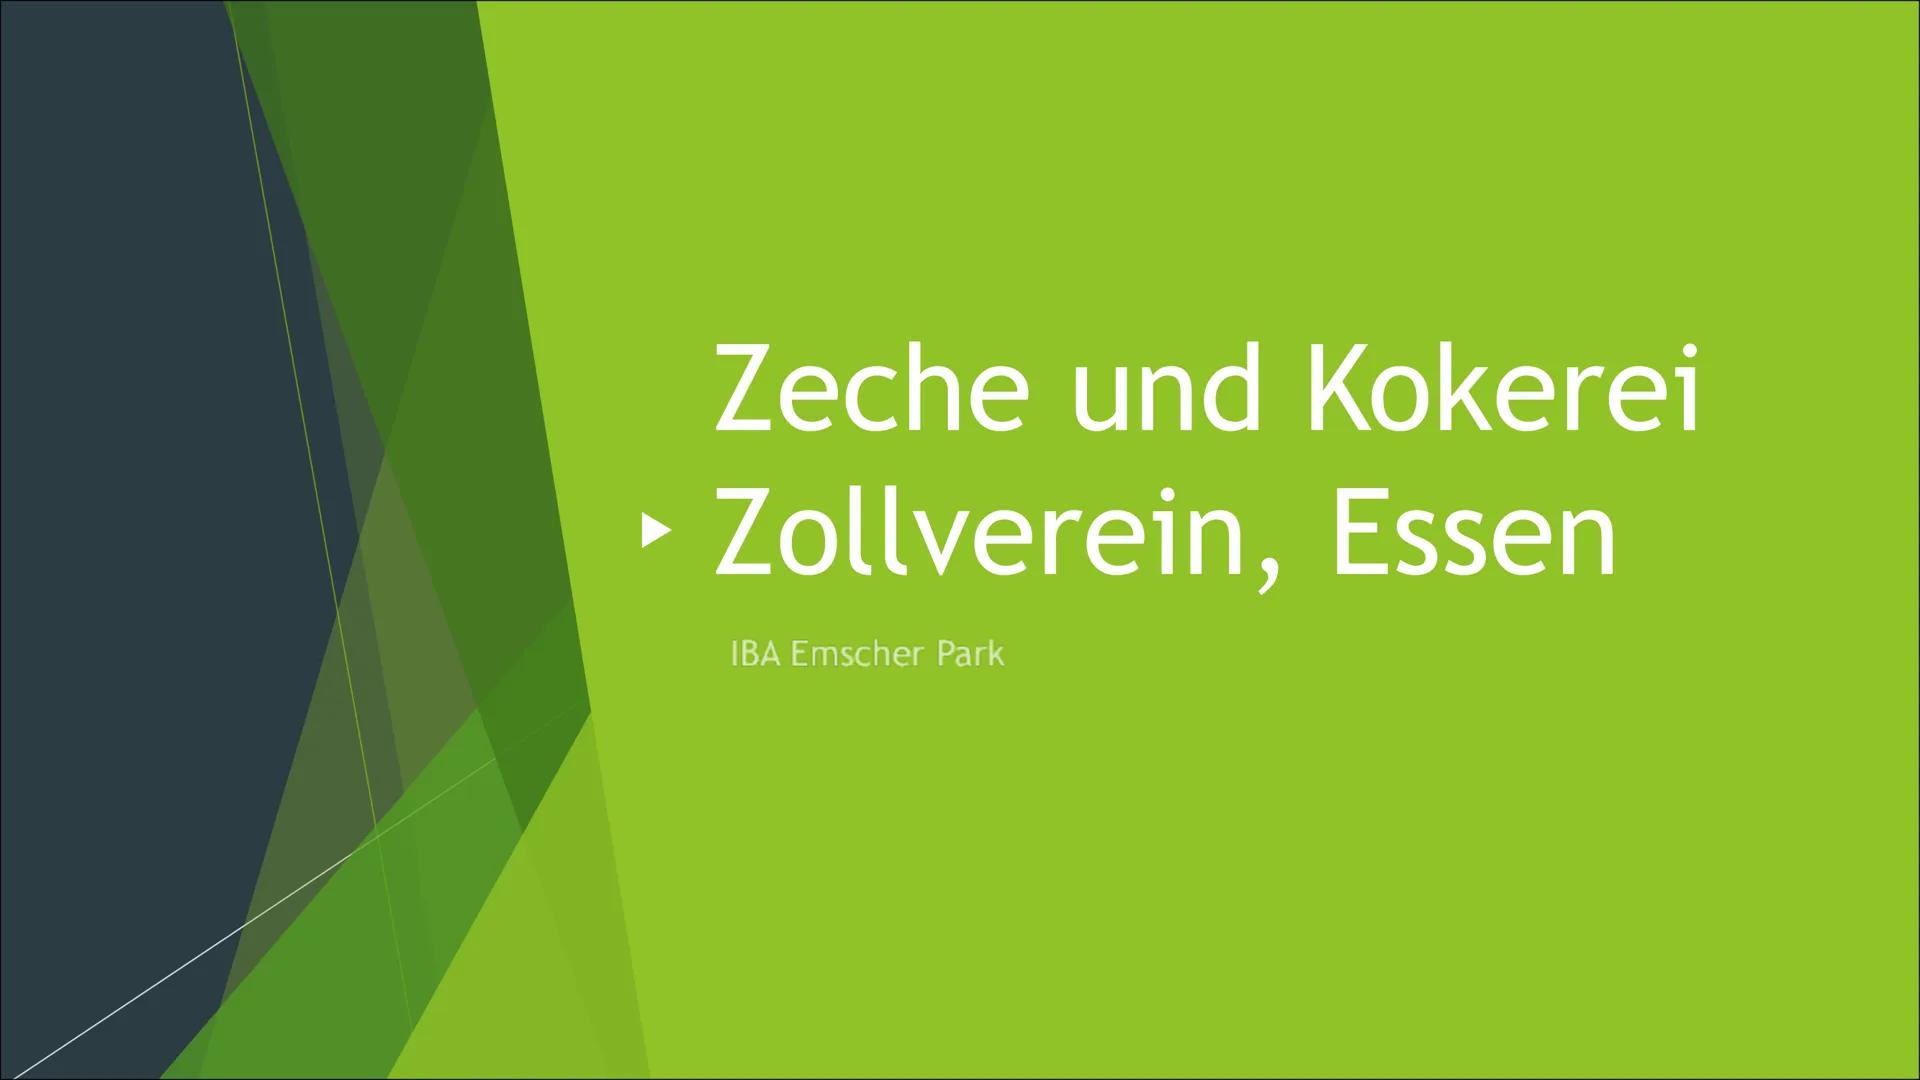 Zeche und Kokerei
› Zollverein, Essen
IBA Emscher Park Table of content
► History
IBA Emscher Park/ Association Bauhütte Zollverein
► Nowada